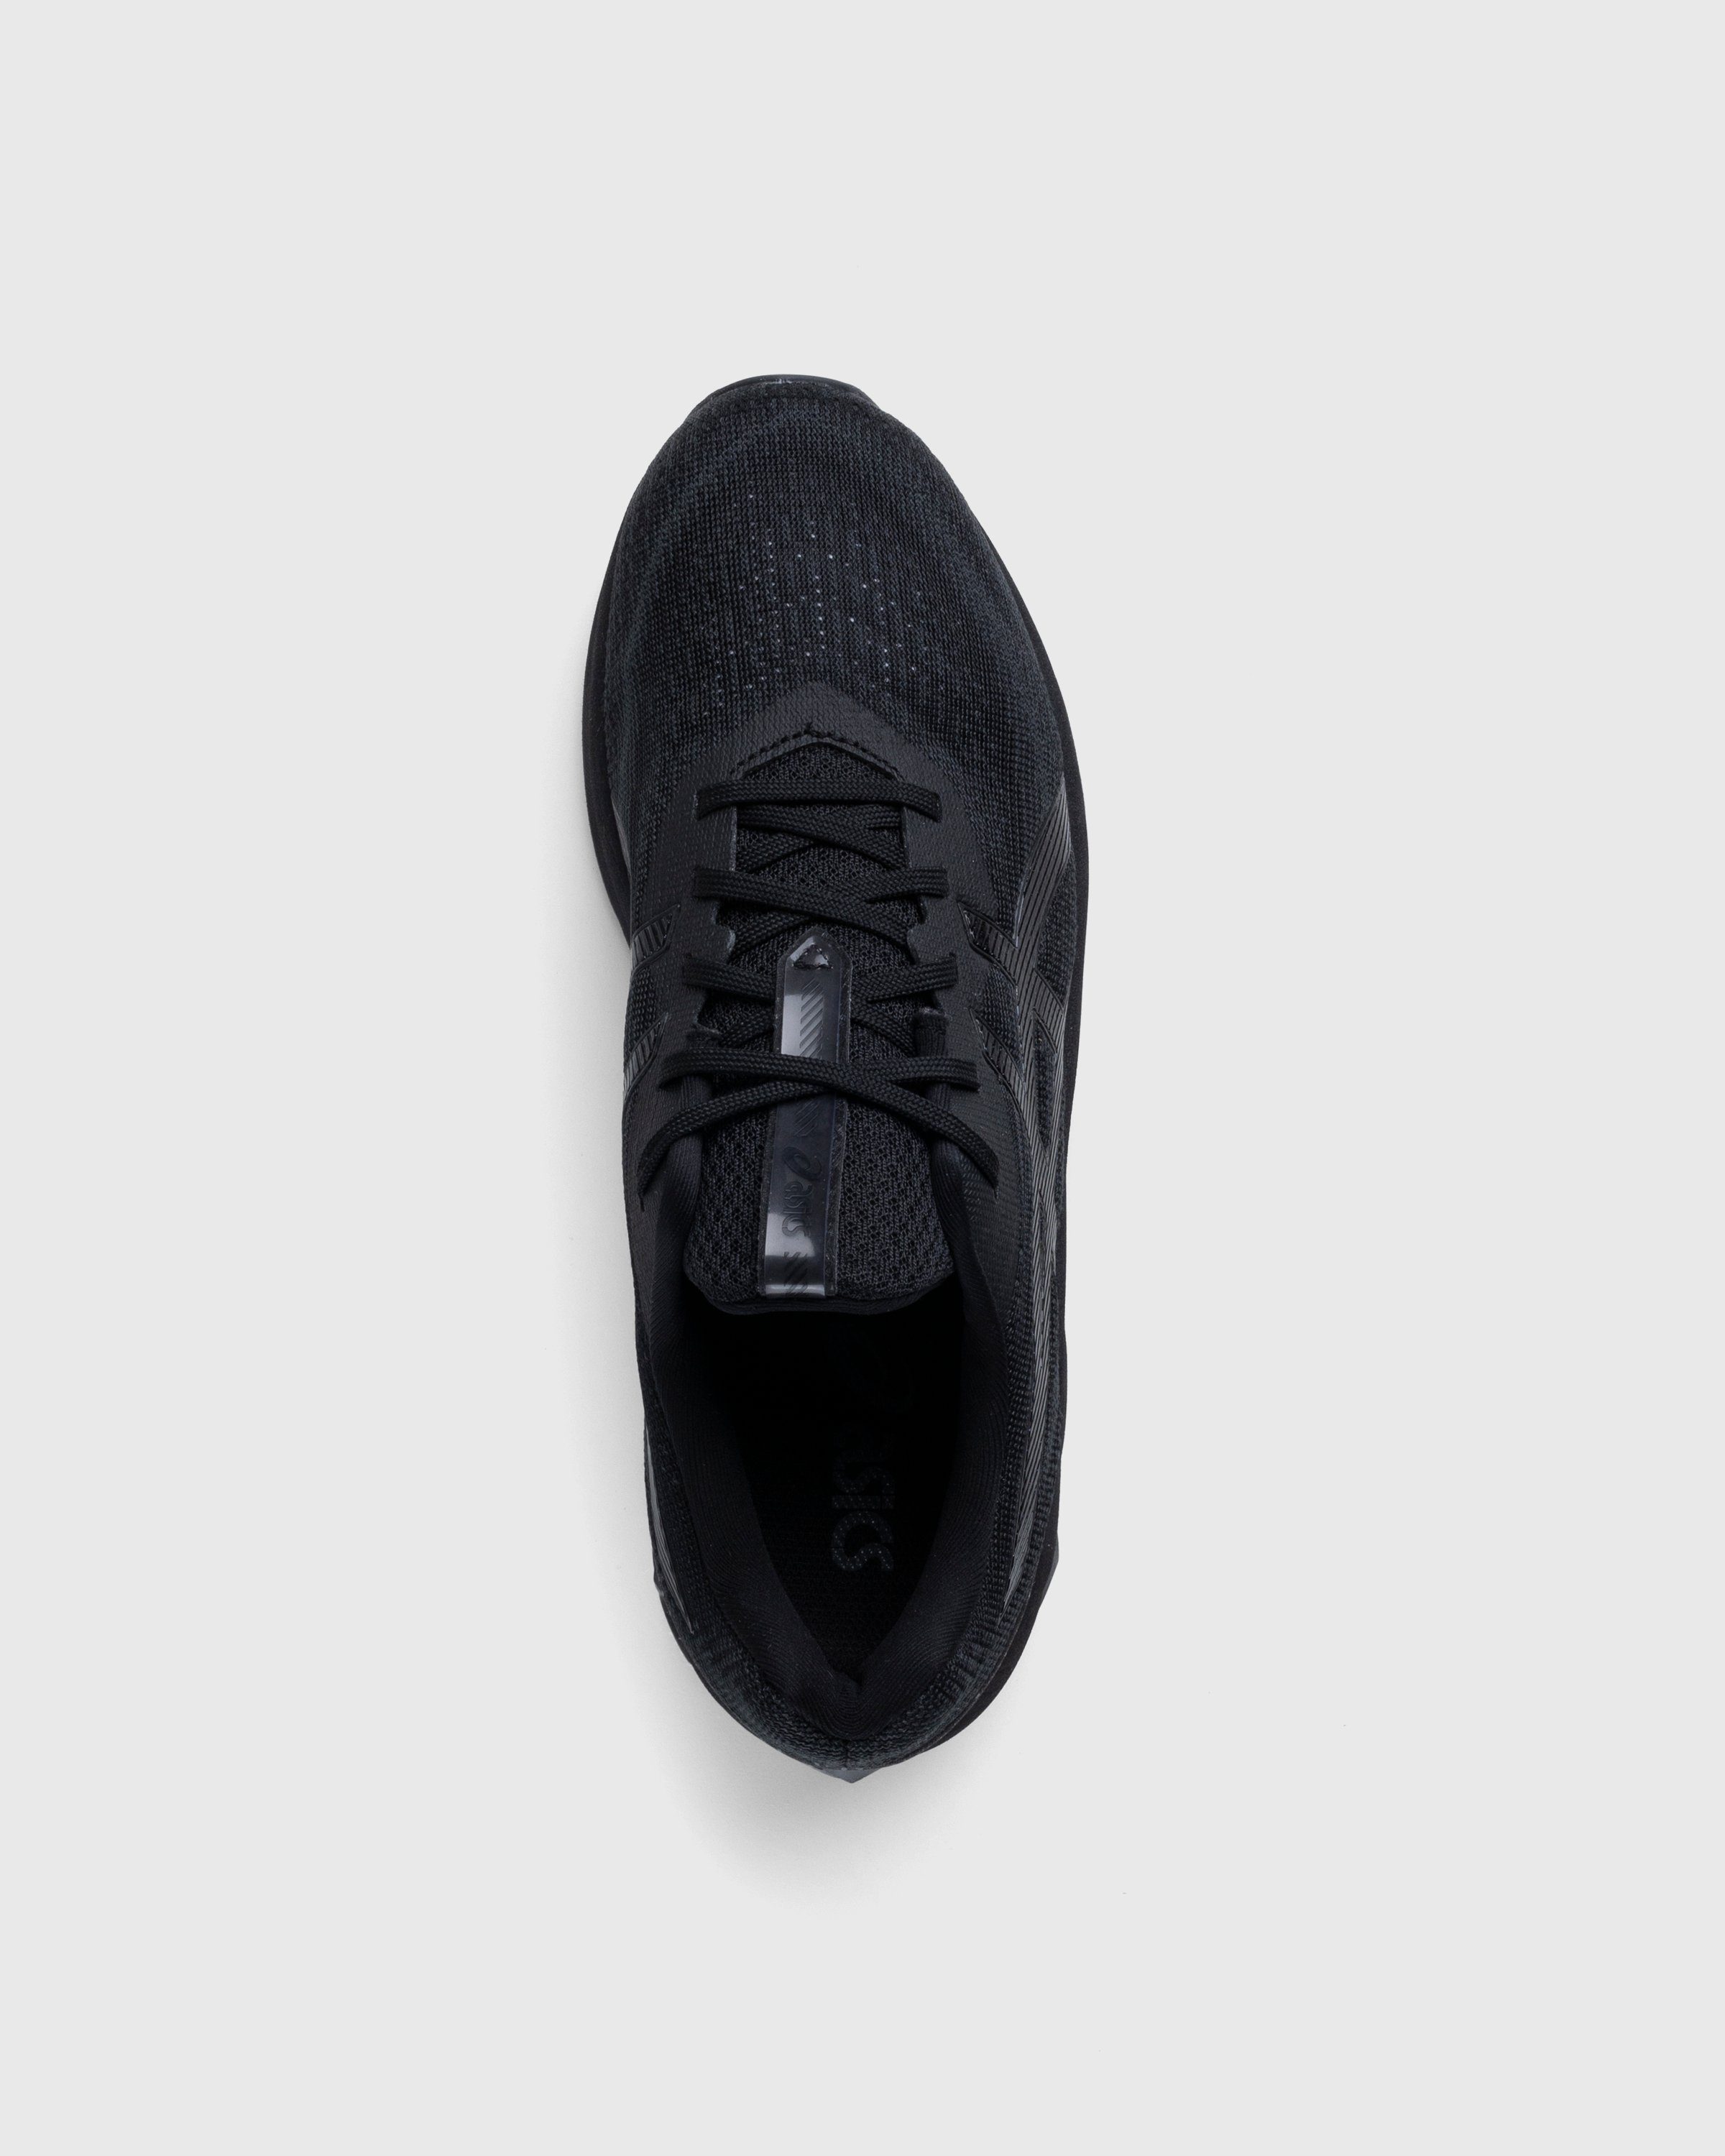 asics – Gel-Quantum 180 VII Black/Black - Low Top Sneakers - Black - Image 5